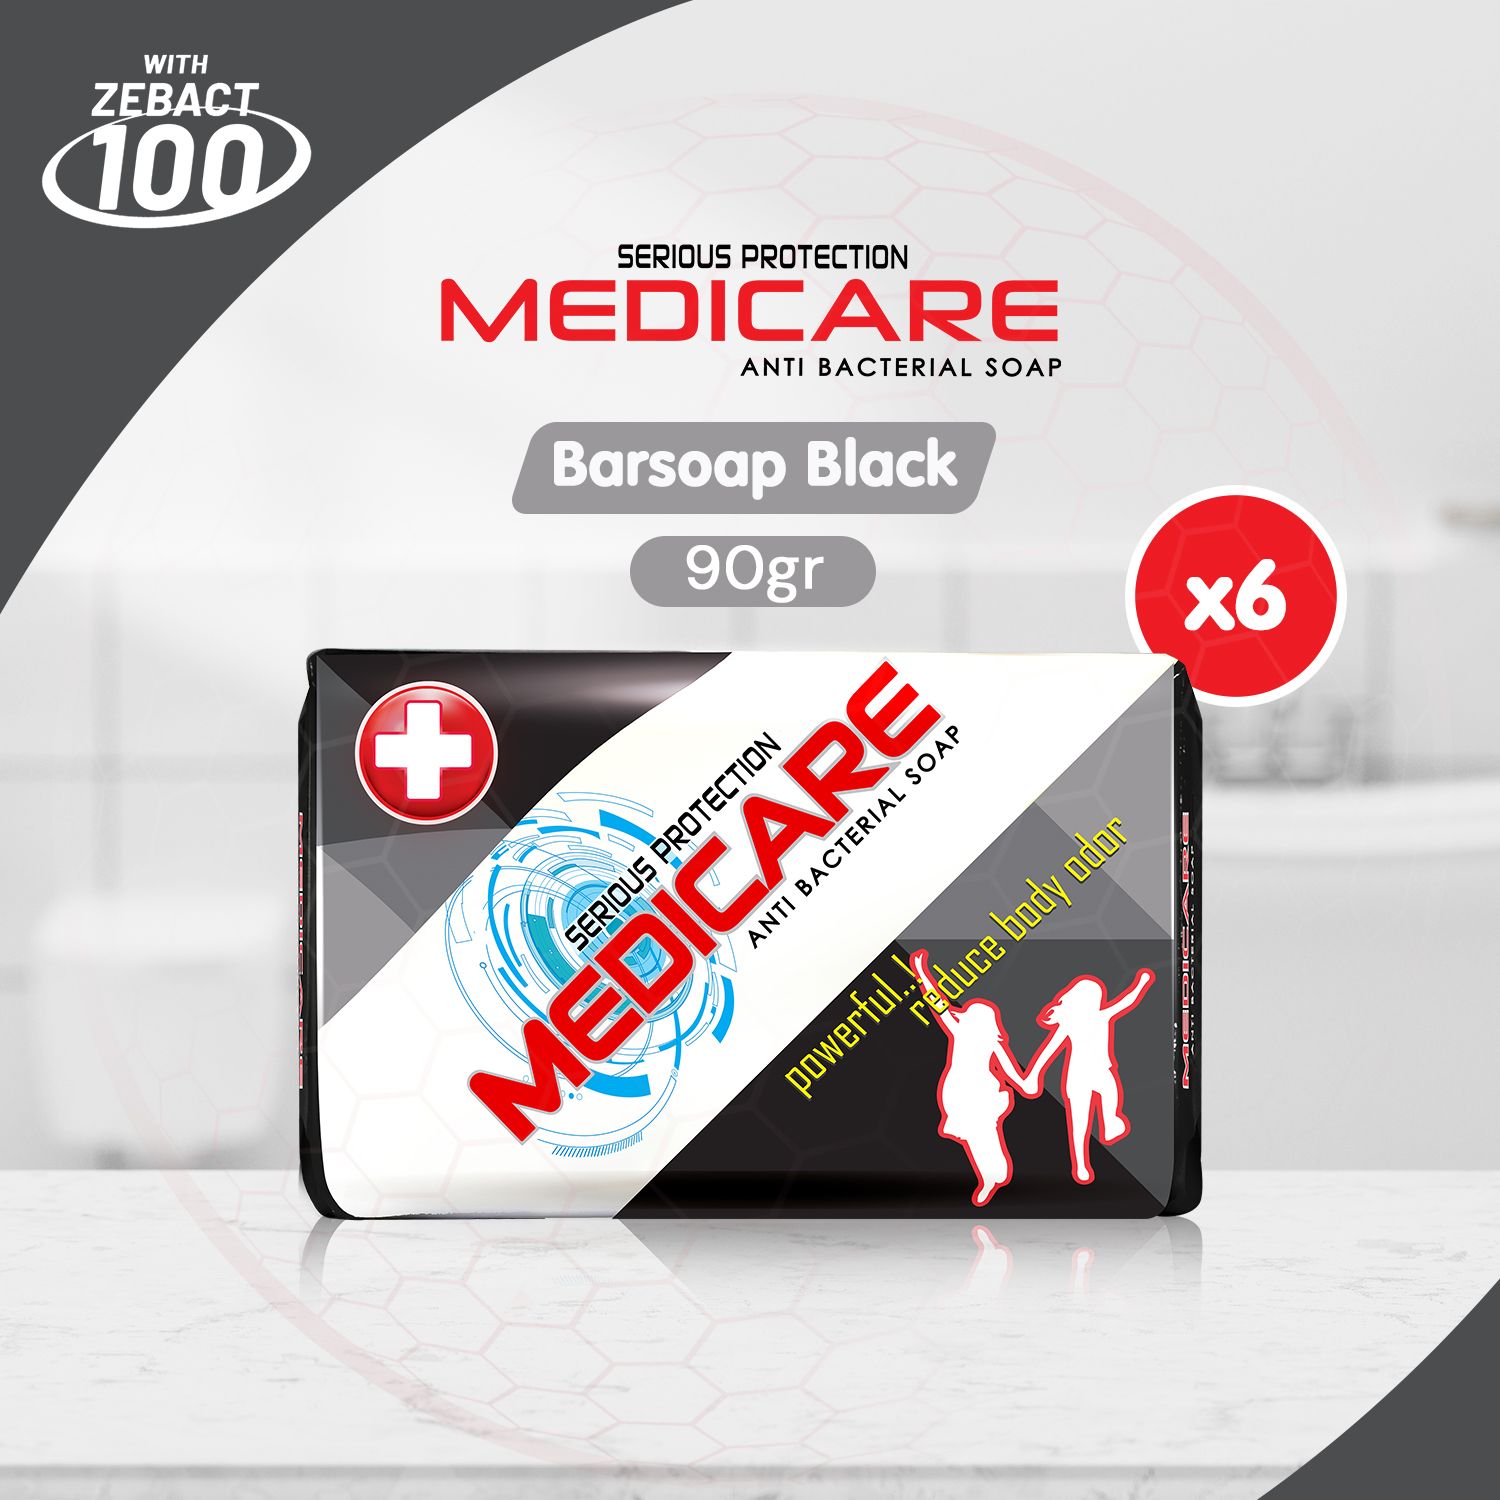 MEDICARE Sabun Antibakteri Black 90g (6 pcs) - 1